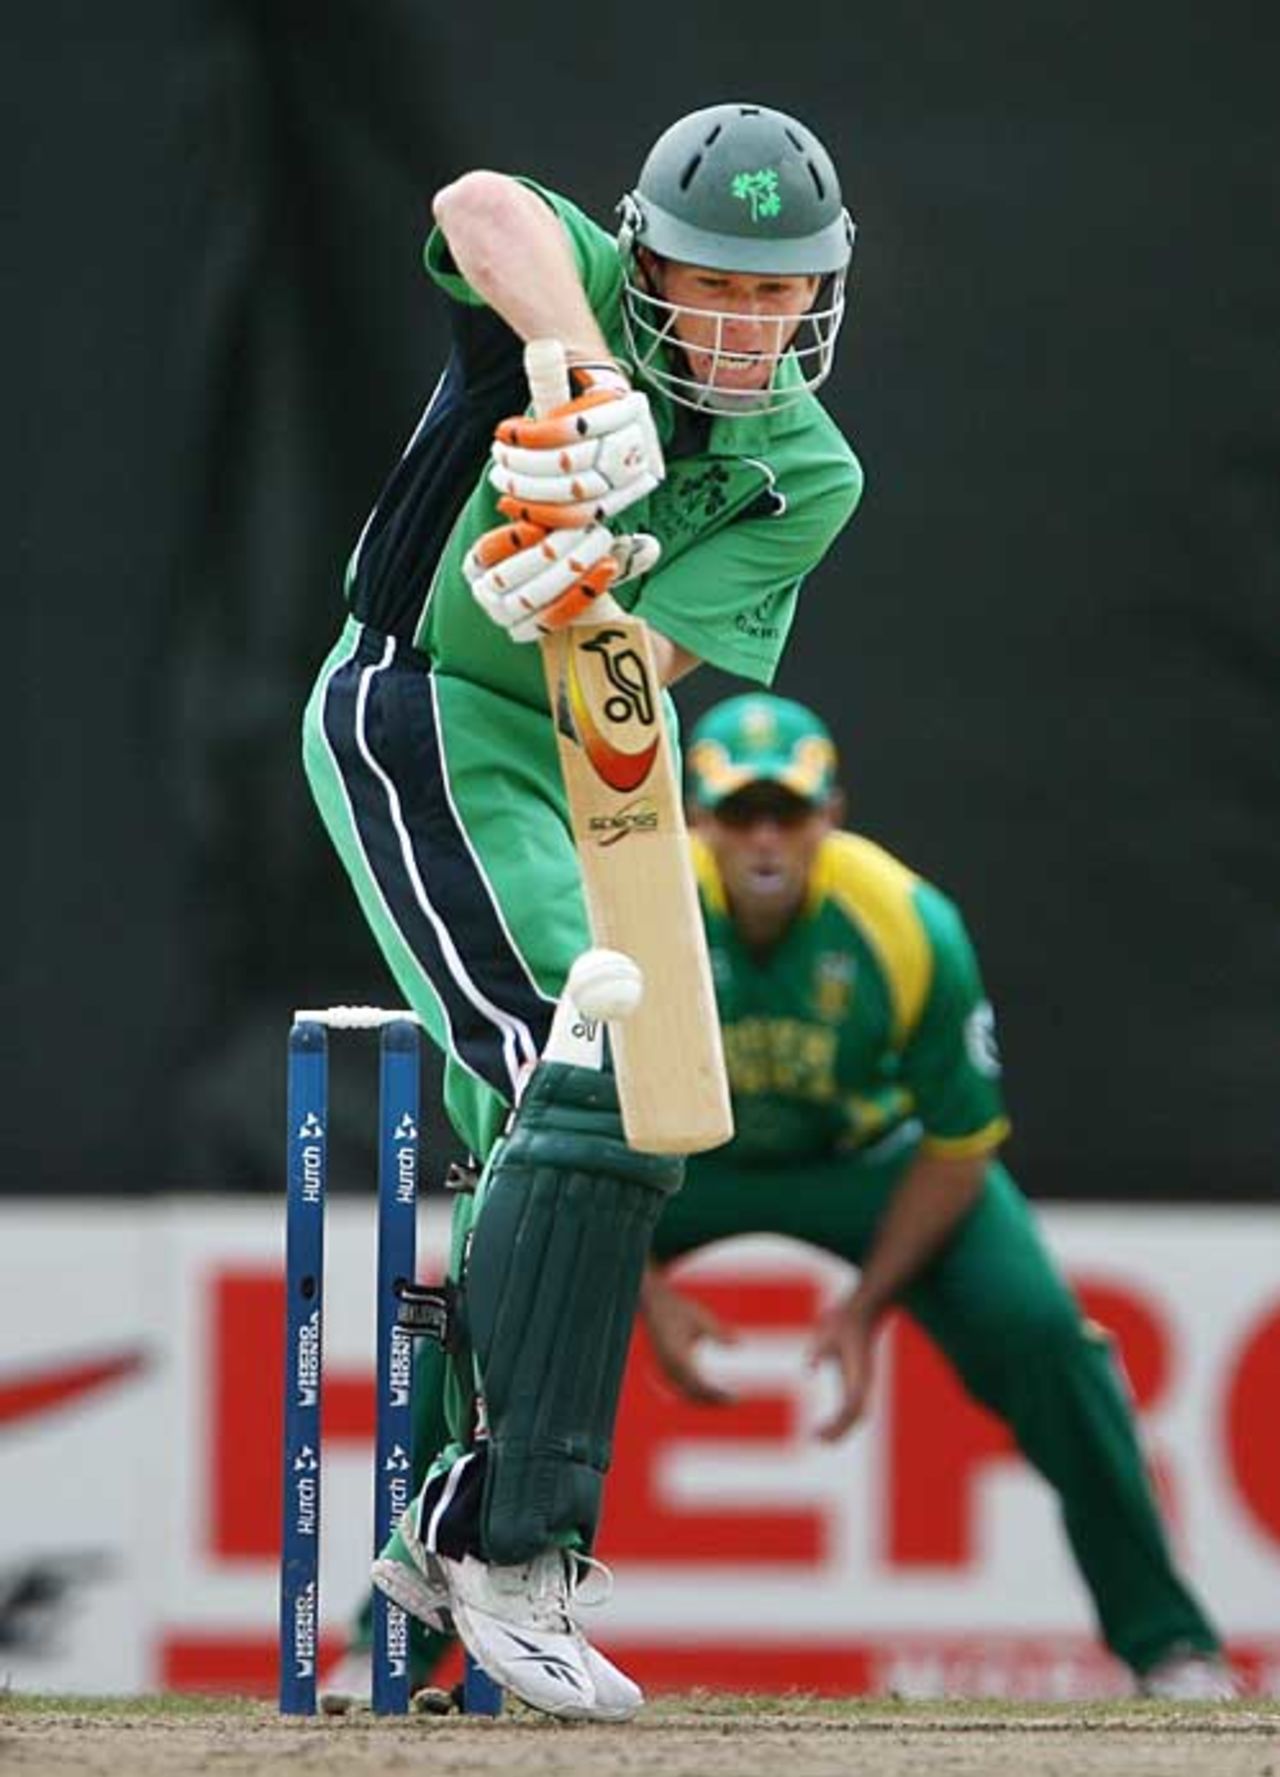 Eoin Morgan plays back as South Africa's bowlers make life tough, Ireland v South Africa, Guyana, April 3, 2007